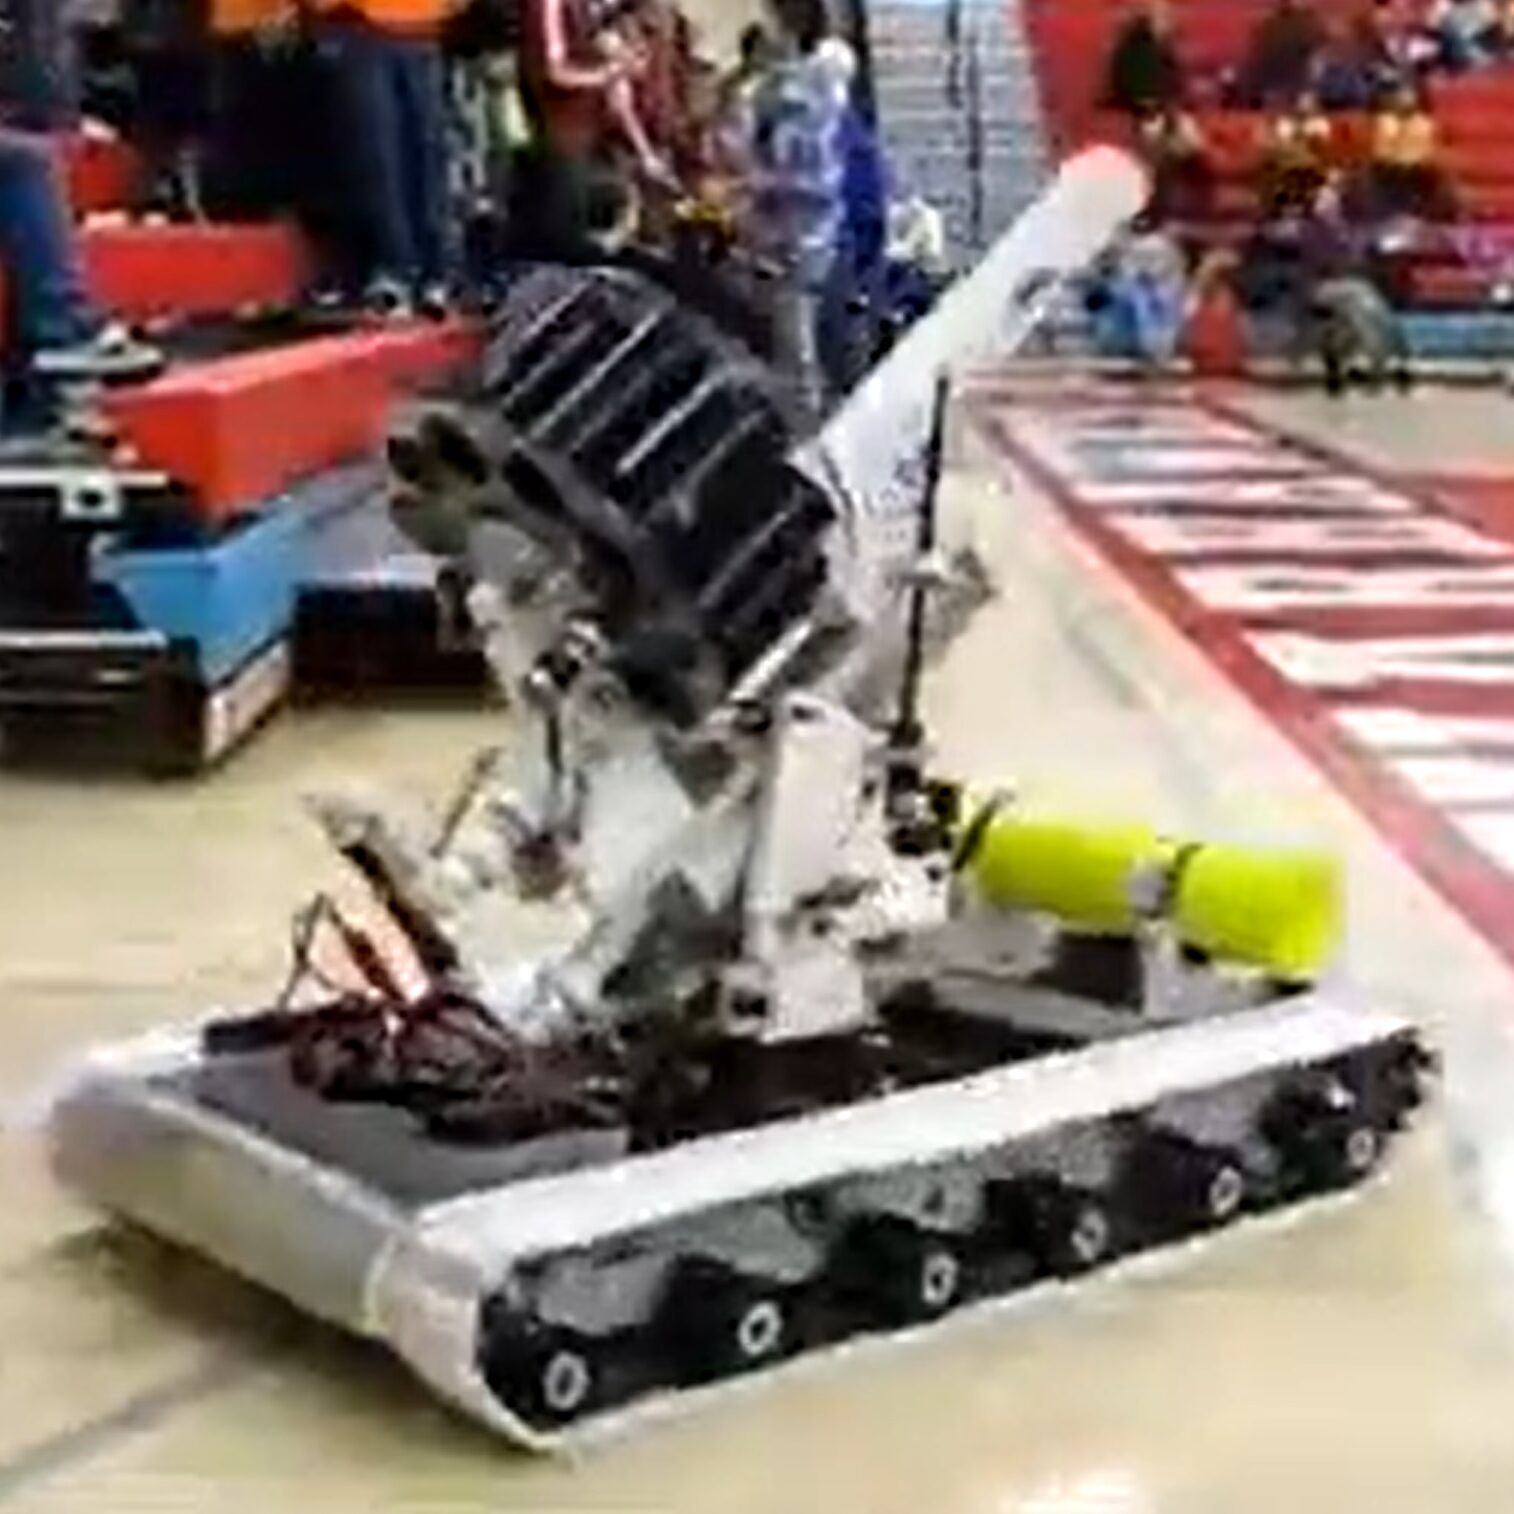 2012 Rebound Rumble robot